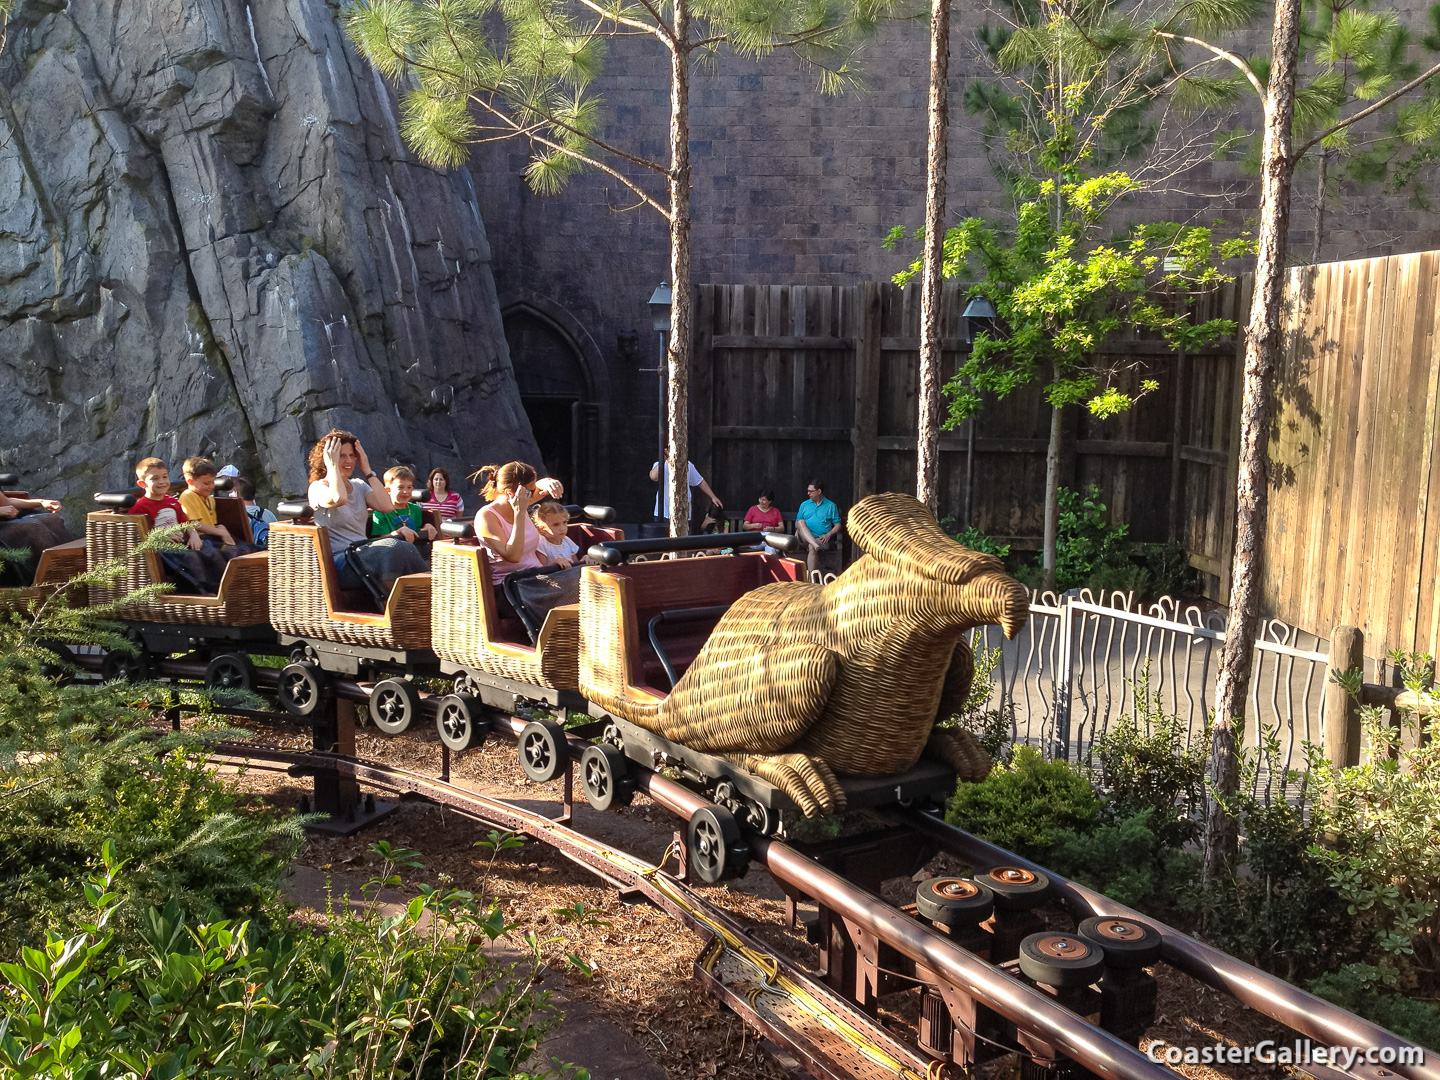 Harry Potter roller coaster - Islands of Adventure - Universal Studios Florida